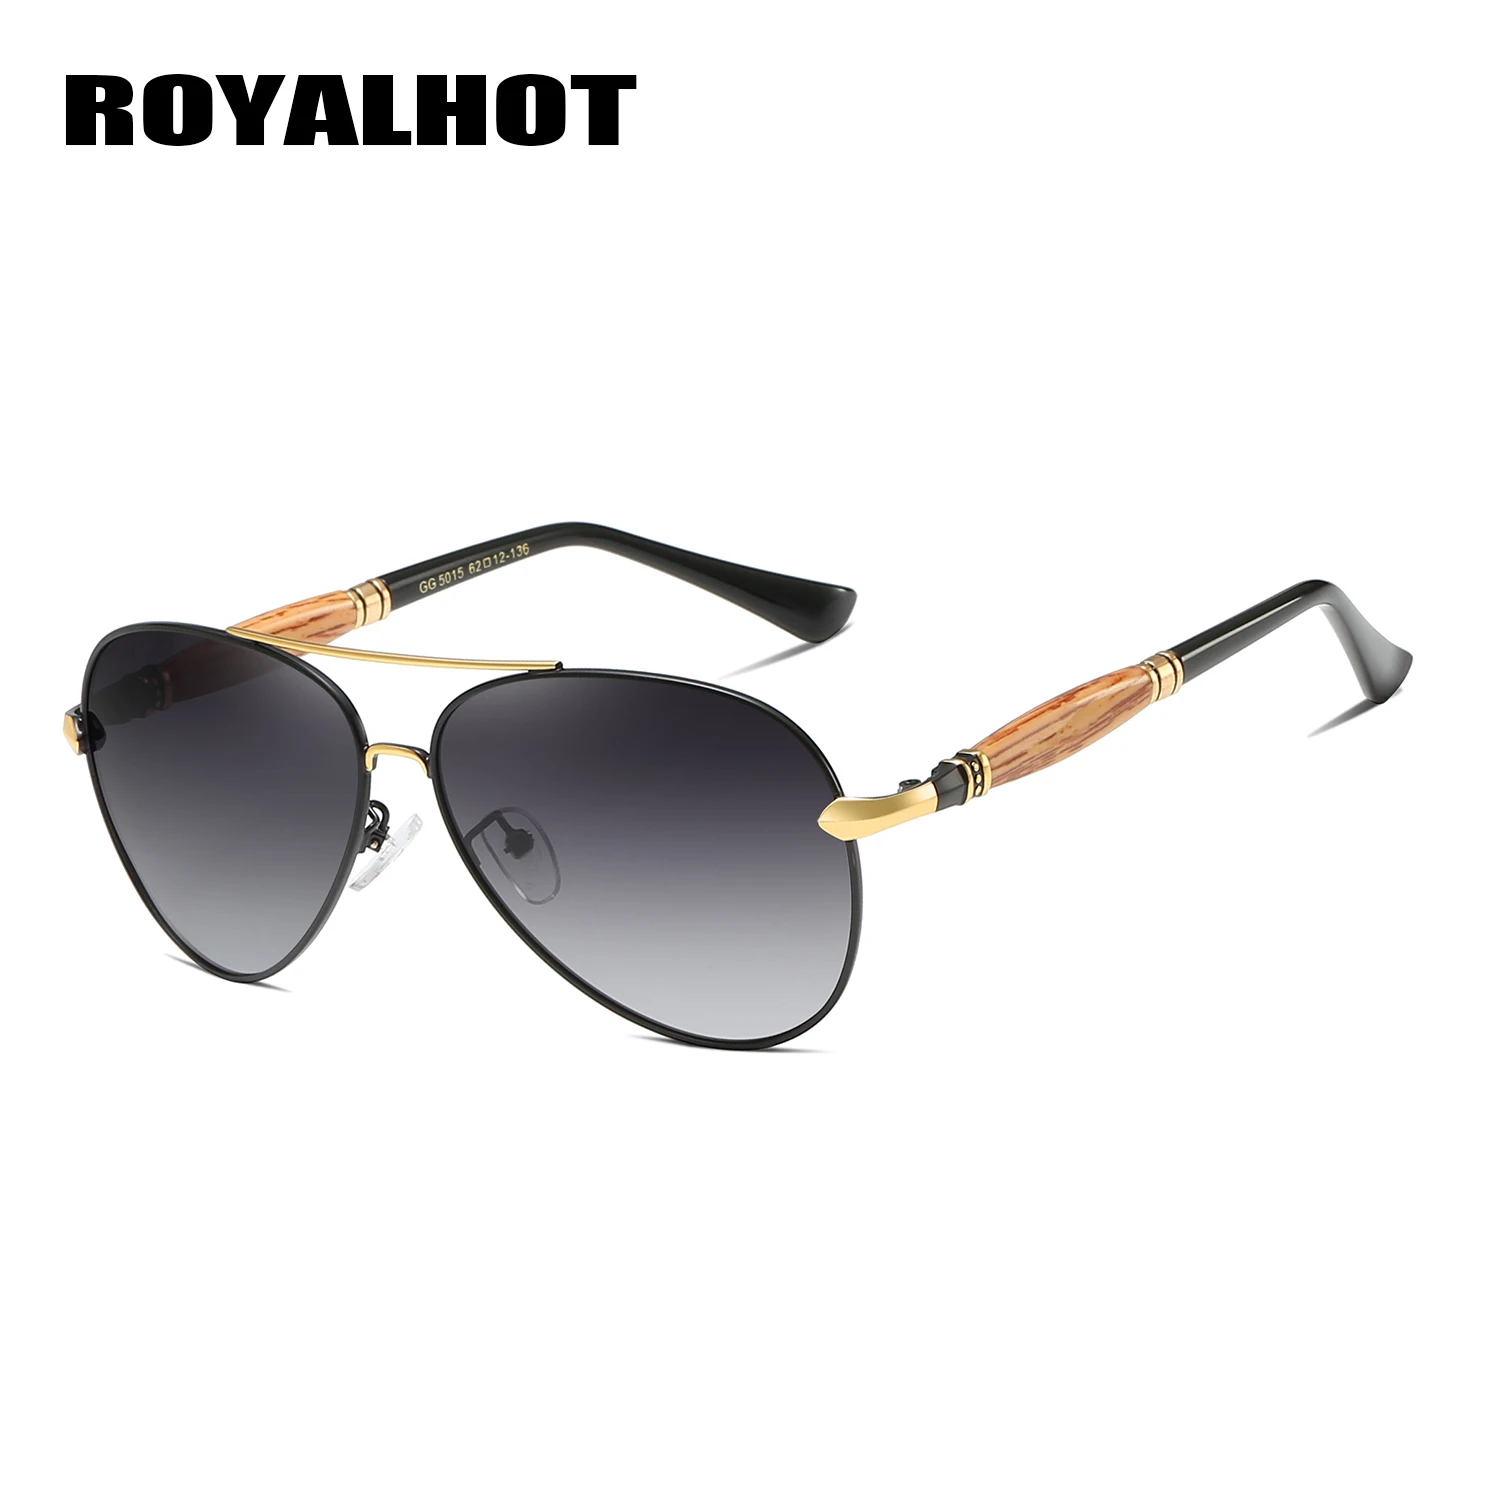 RoyalHot Men Women Polarized Sunglasses Oval Aloy&Wood Frame Sun Glasses Driving Glasses Shades Oculos masculino Male 900151 - Цвет линз: Black Gold